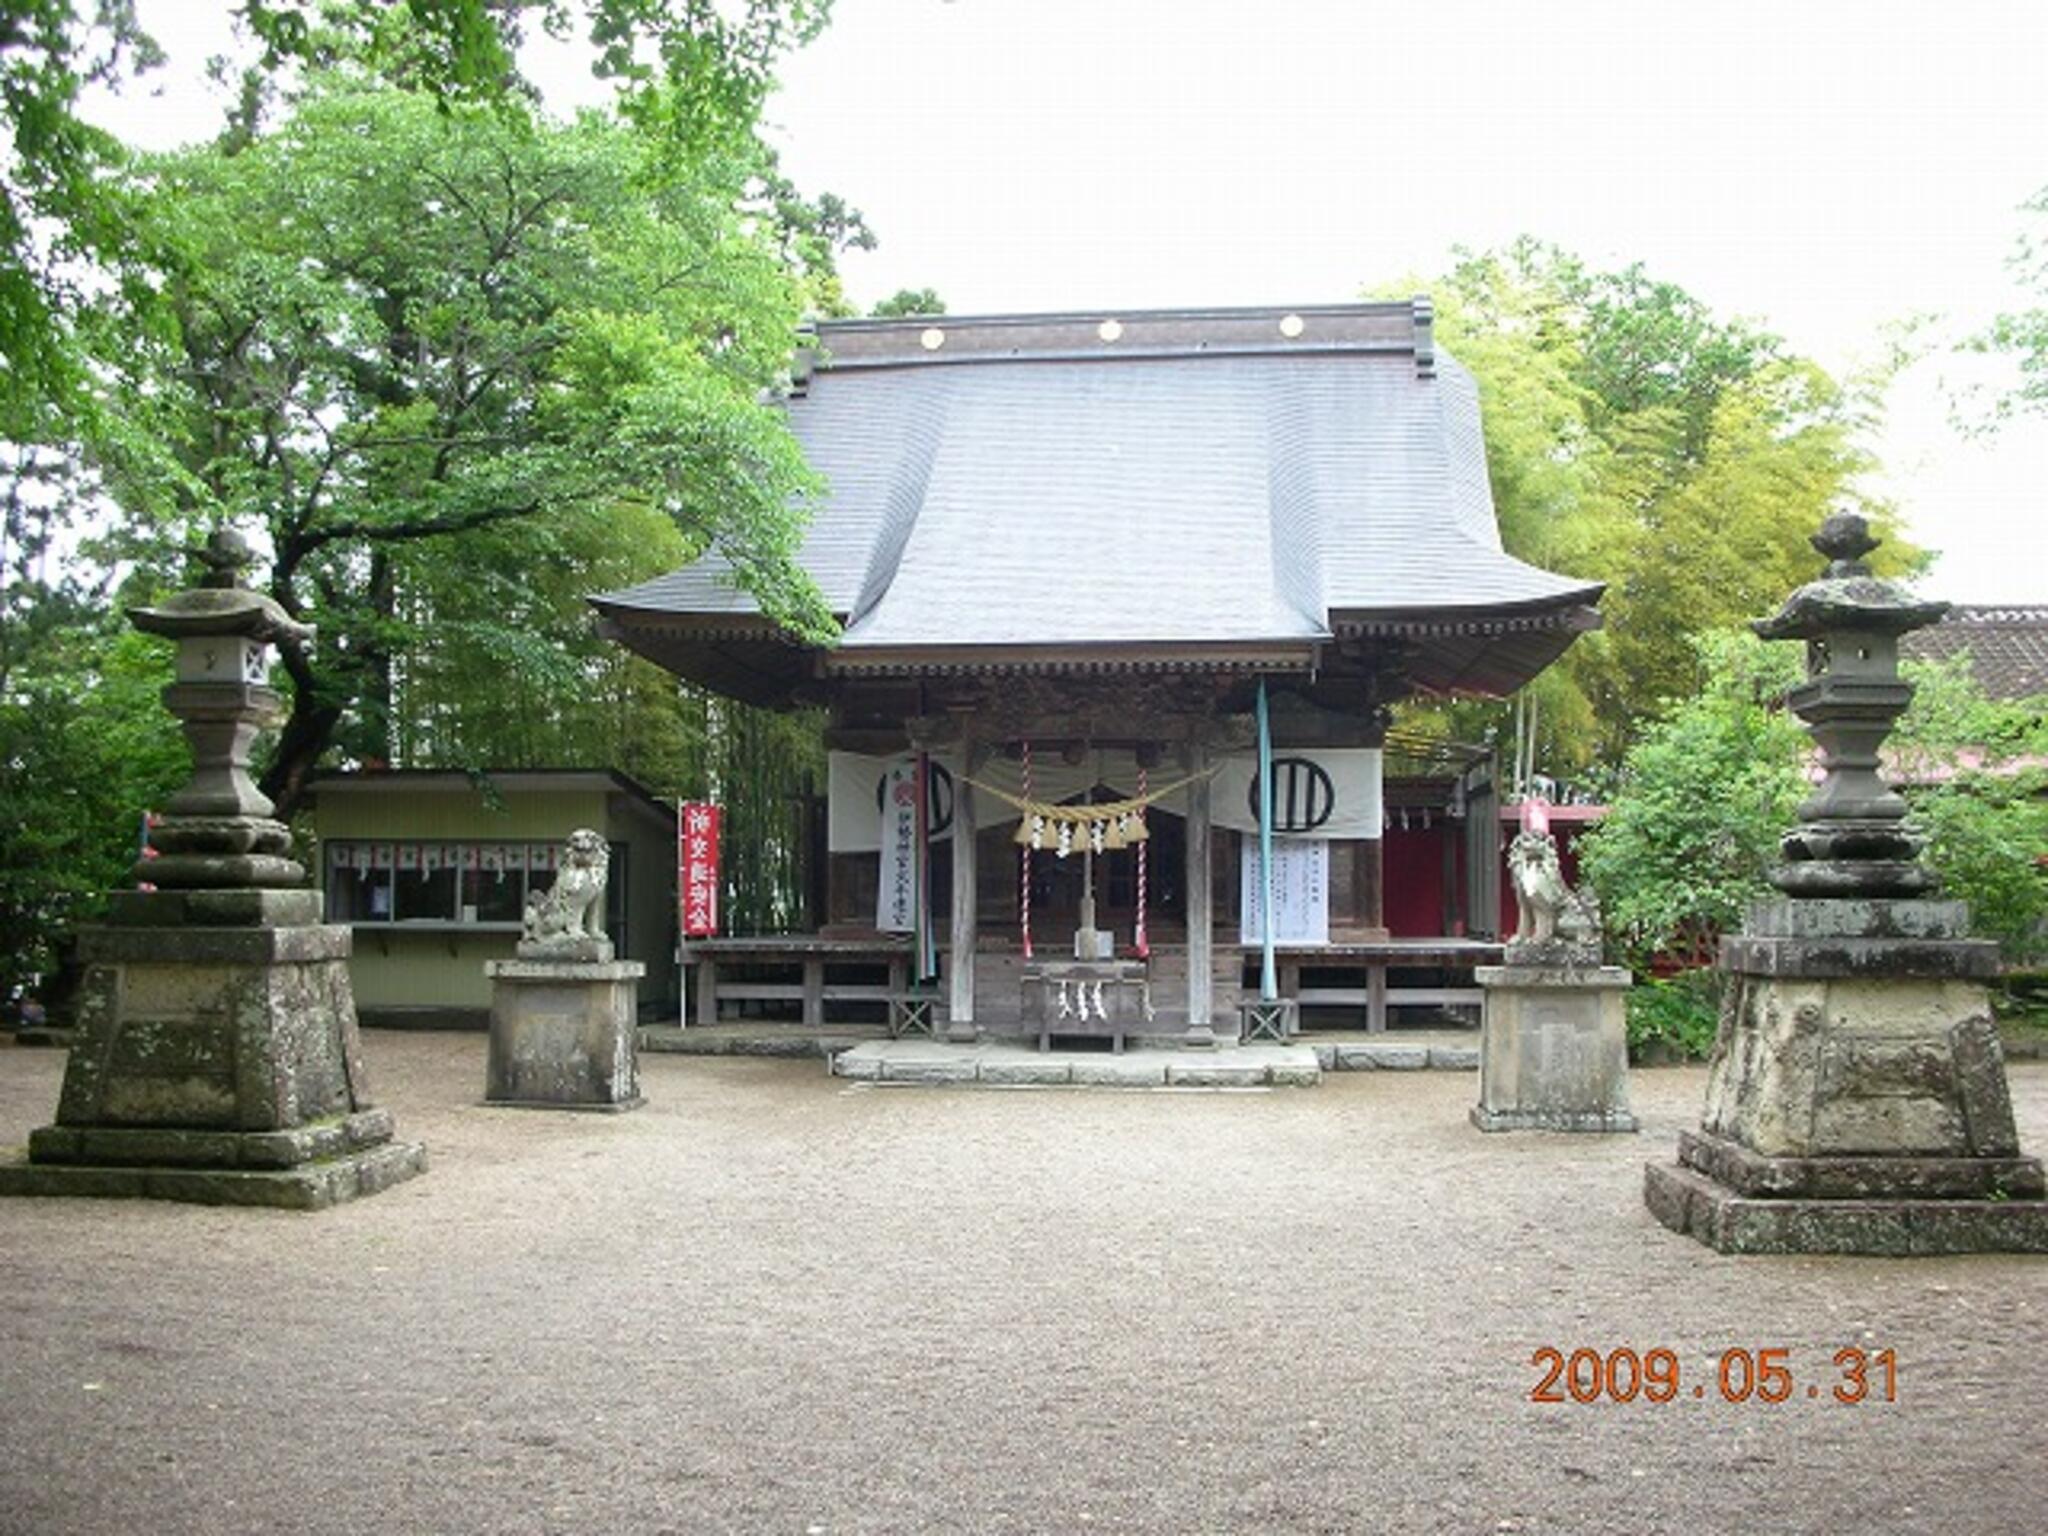 古川神社 - 大崎市古川諏訪/神社 | Yahoo!マップ